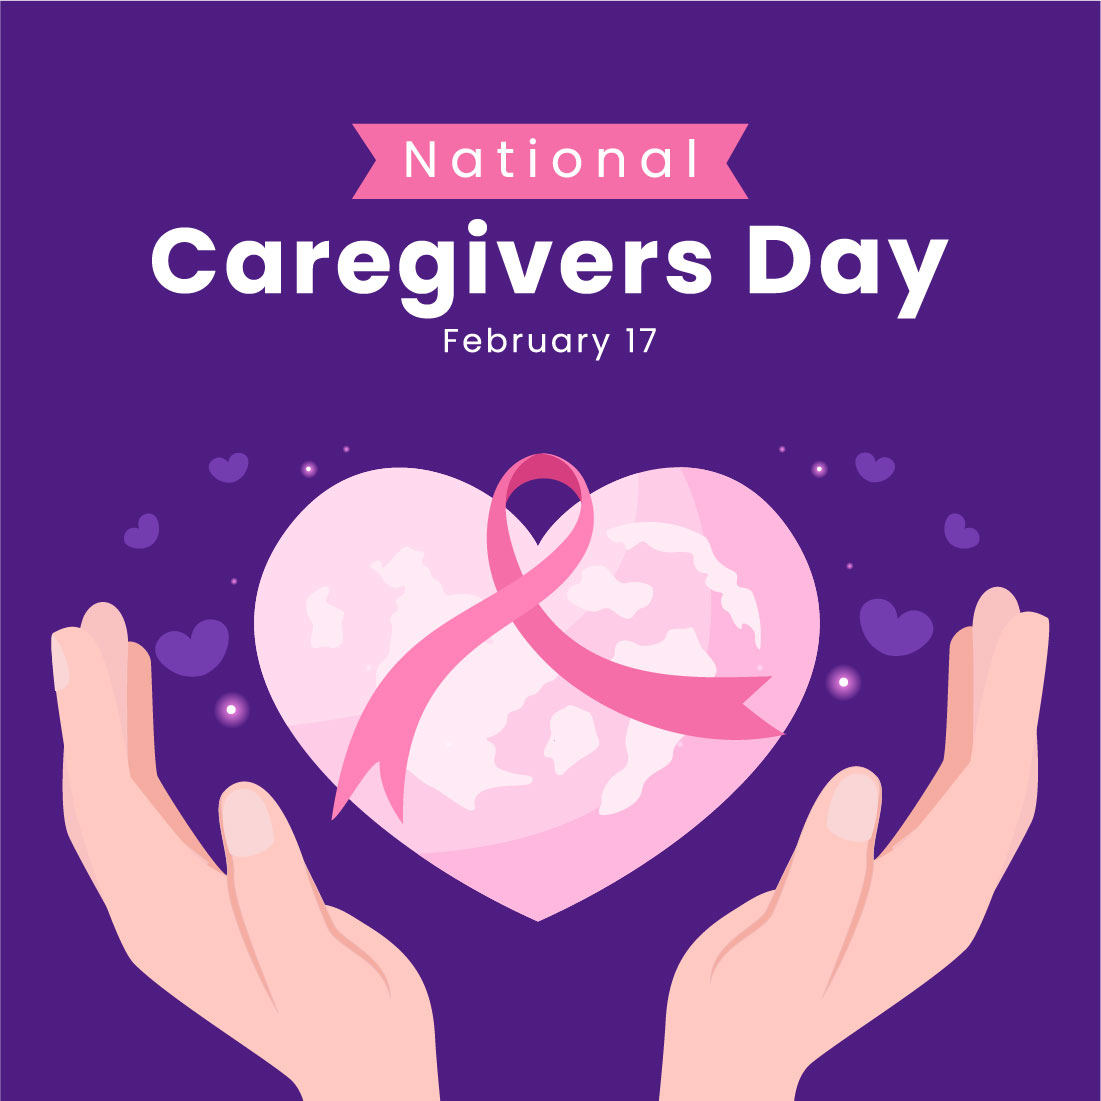 National Caregivers Day Illustration cover image.